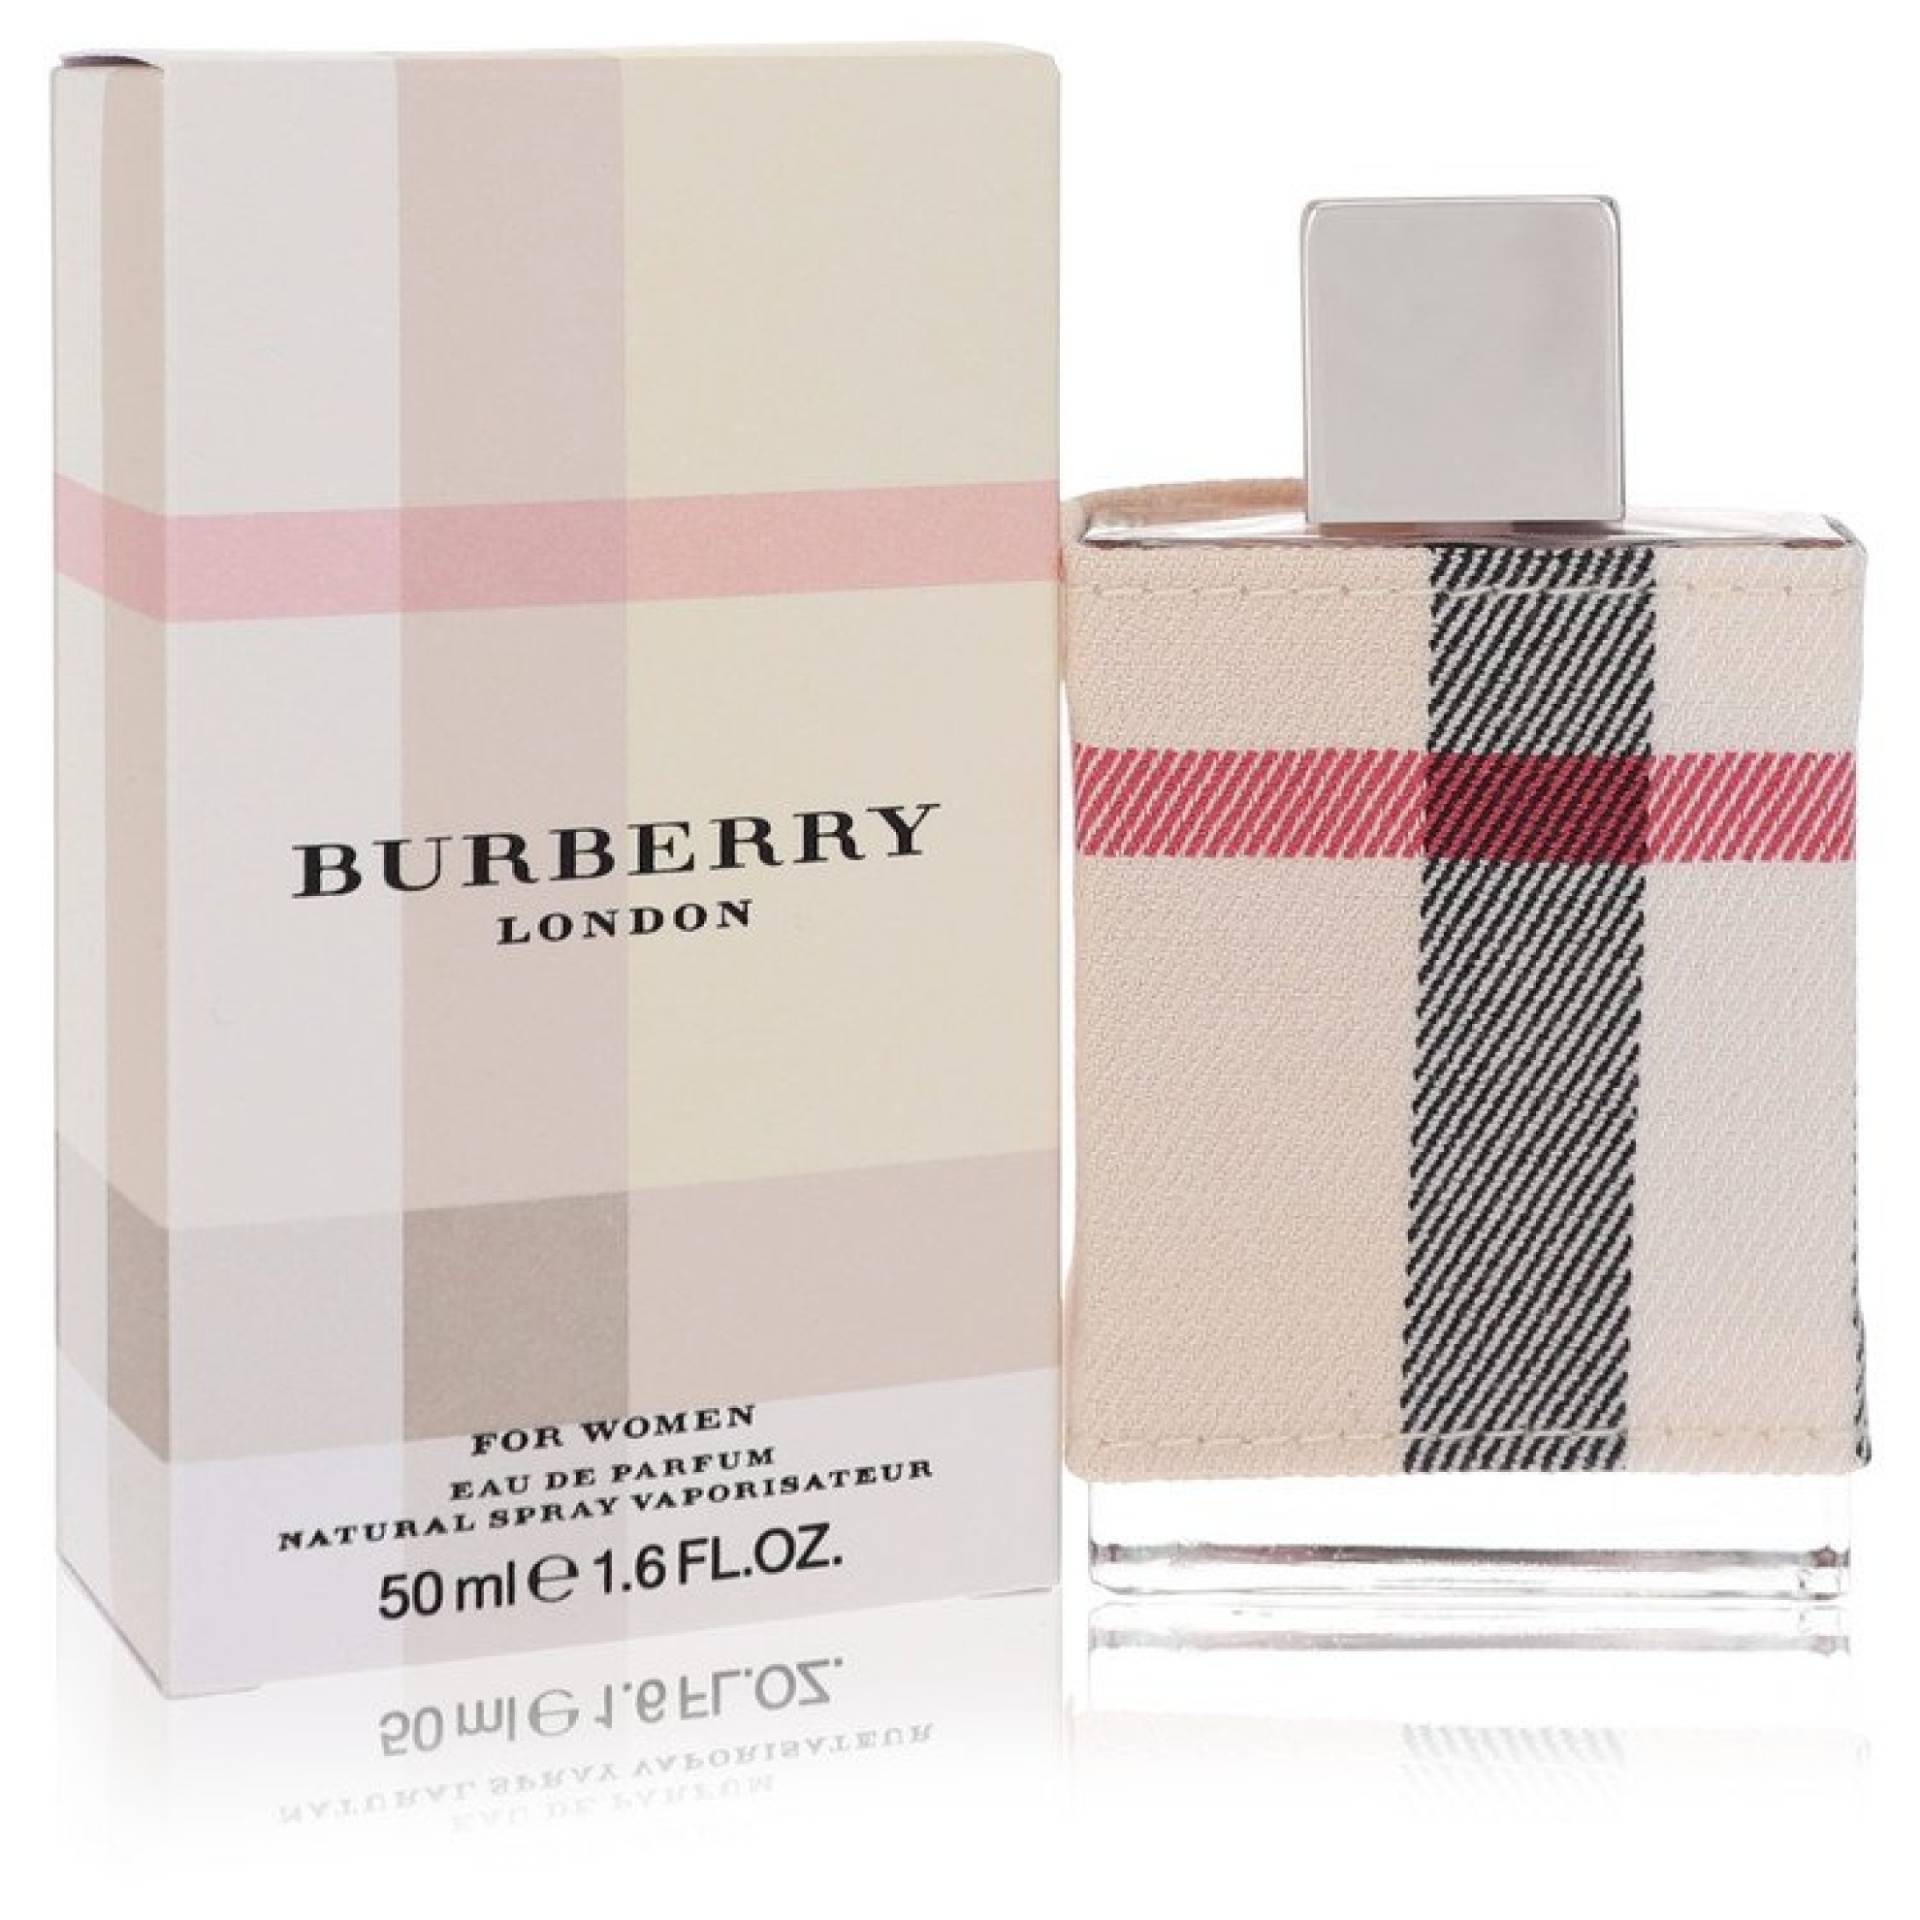 Burberry London (New) Eau De Parfum Spray 50 ml von Burberry